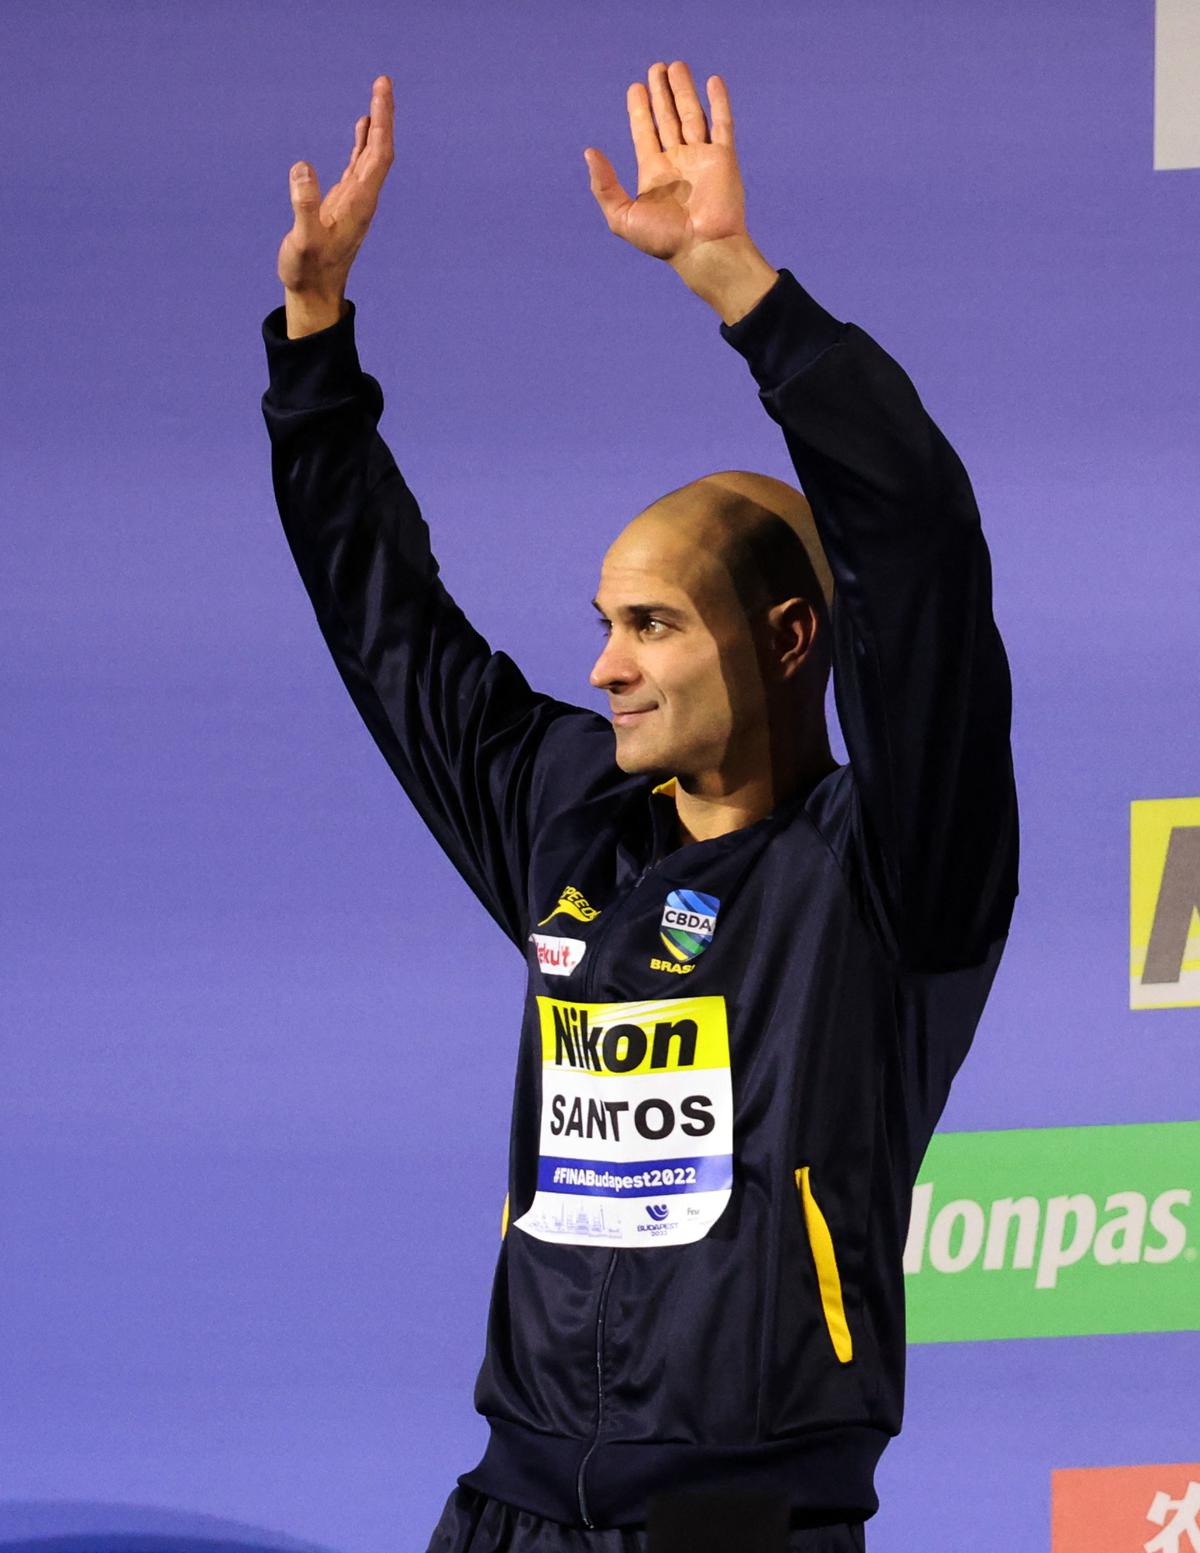 Men’s 50m butterfly silver medallist, Brazil’s Nicholas Santos on the podium after the final 